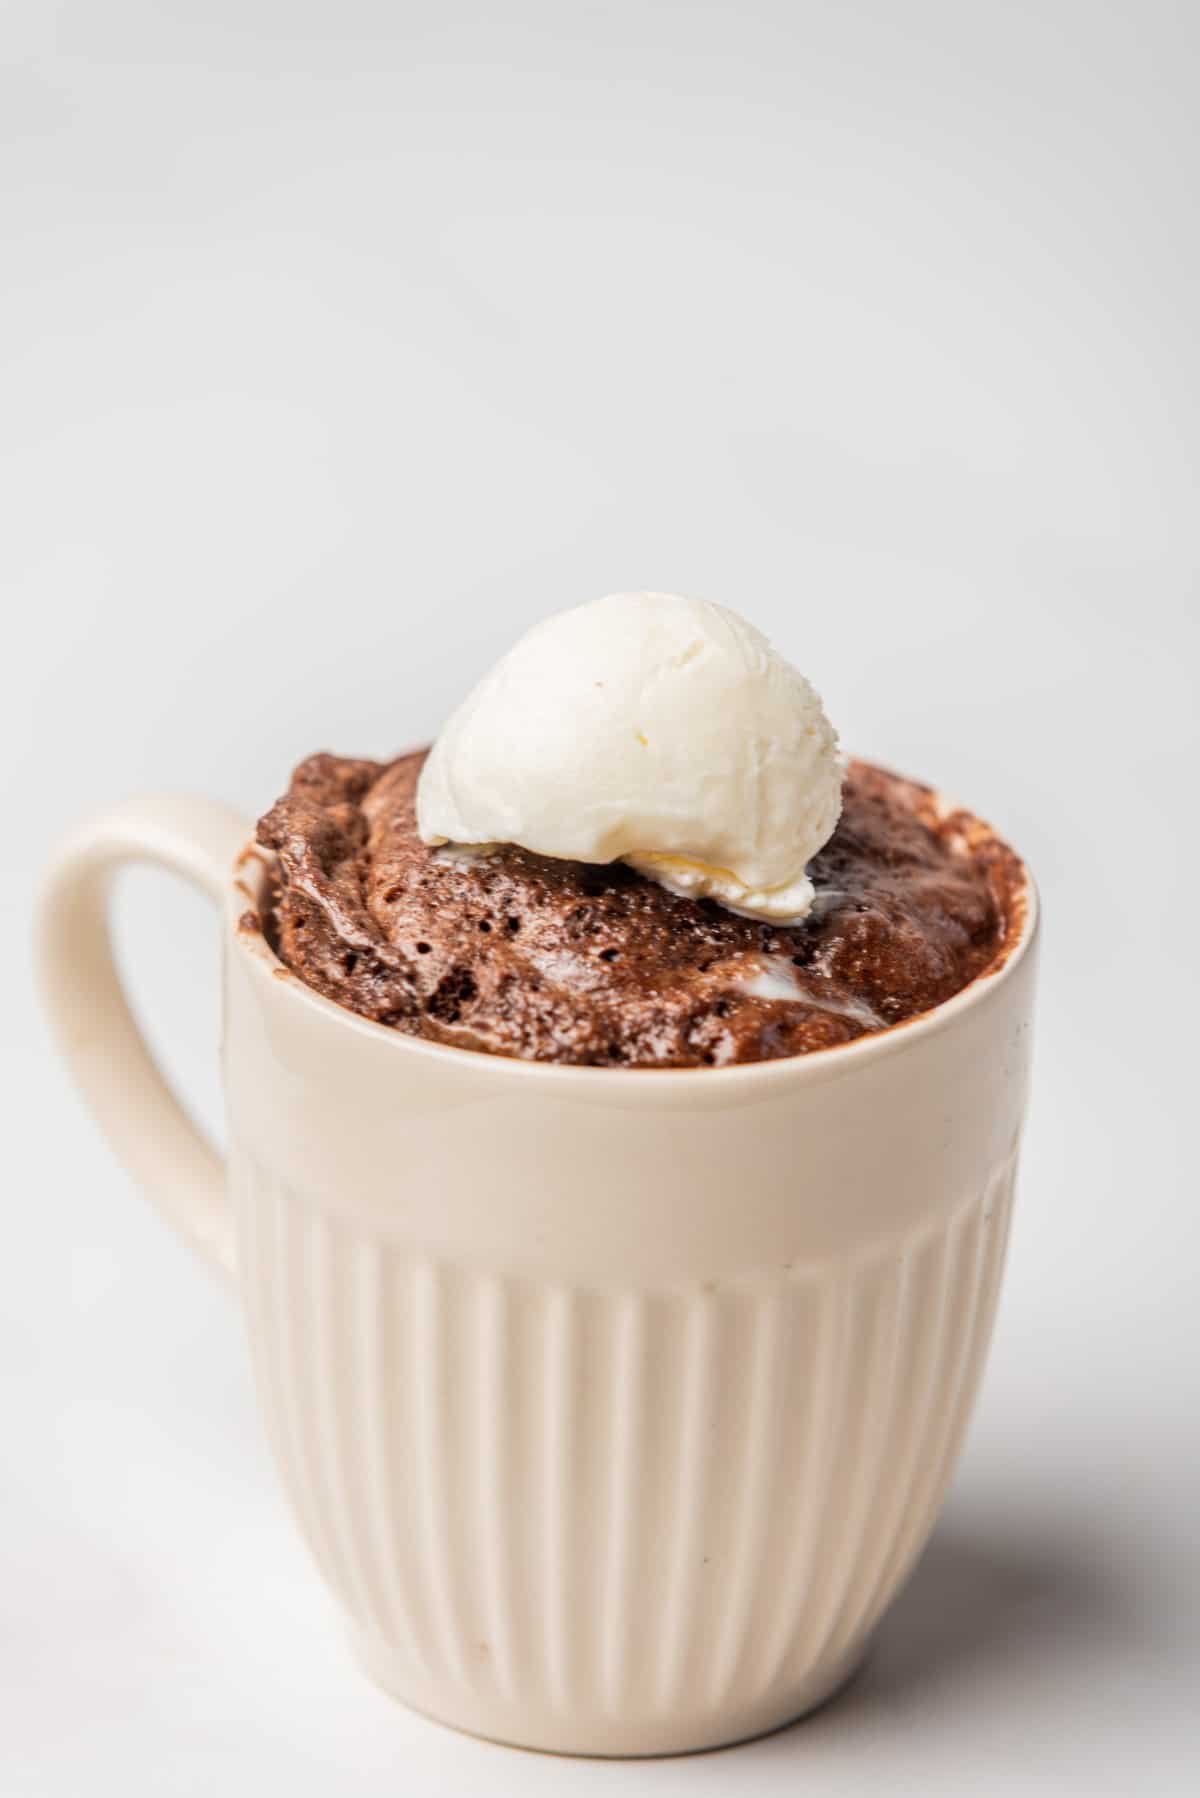 An image of chocolate mug cake with vanilla ice cream on top.